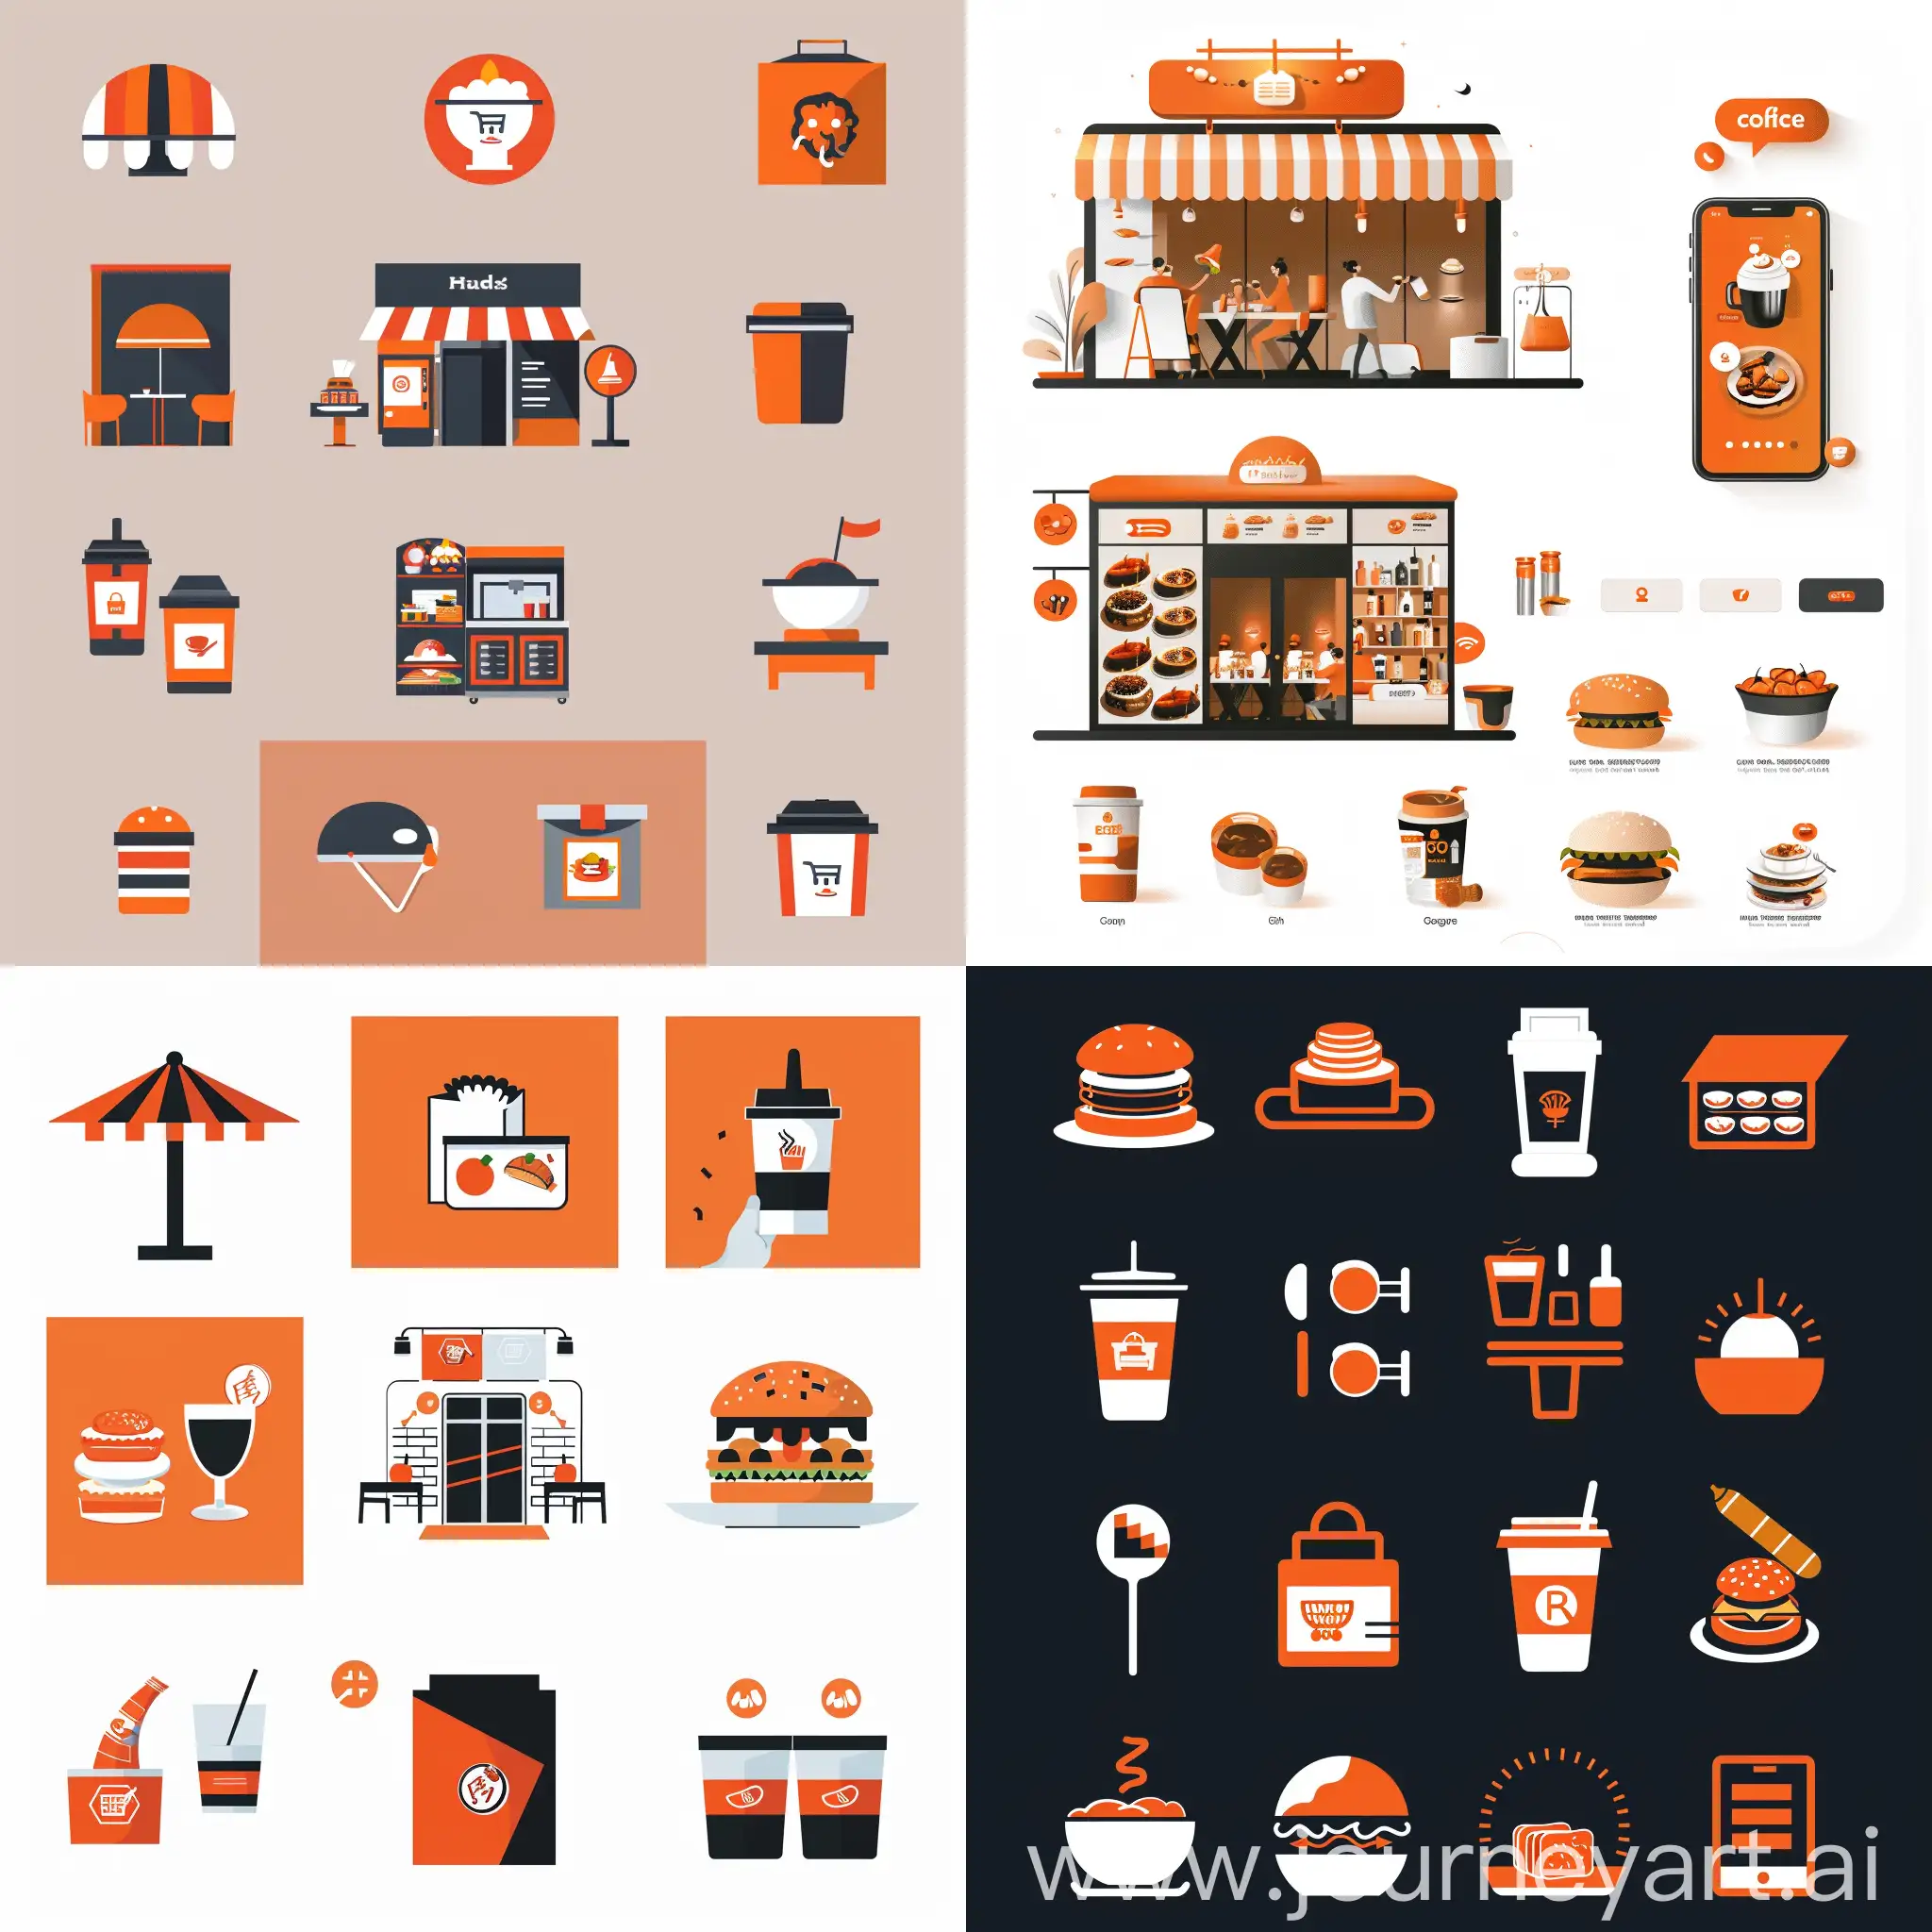 Modern-Restaurant-Online-Group-Buying-Bright-Orange-Icons-for-Easy-Navigation